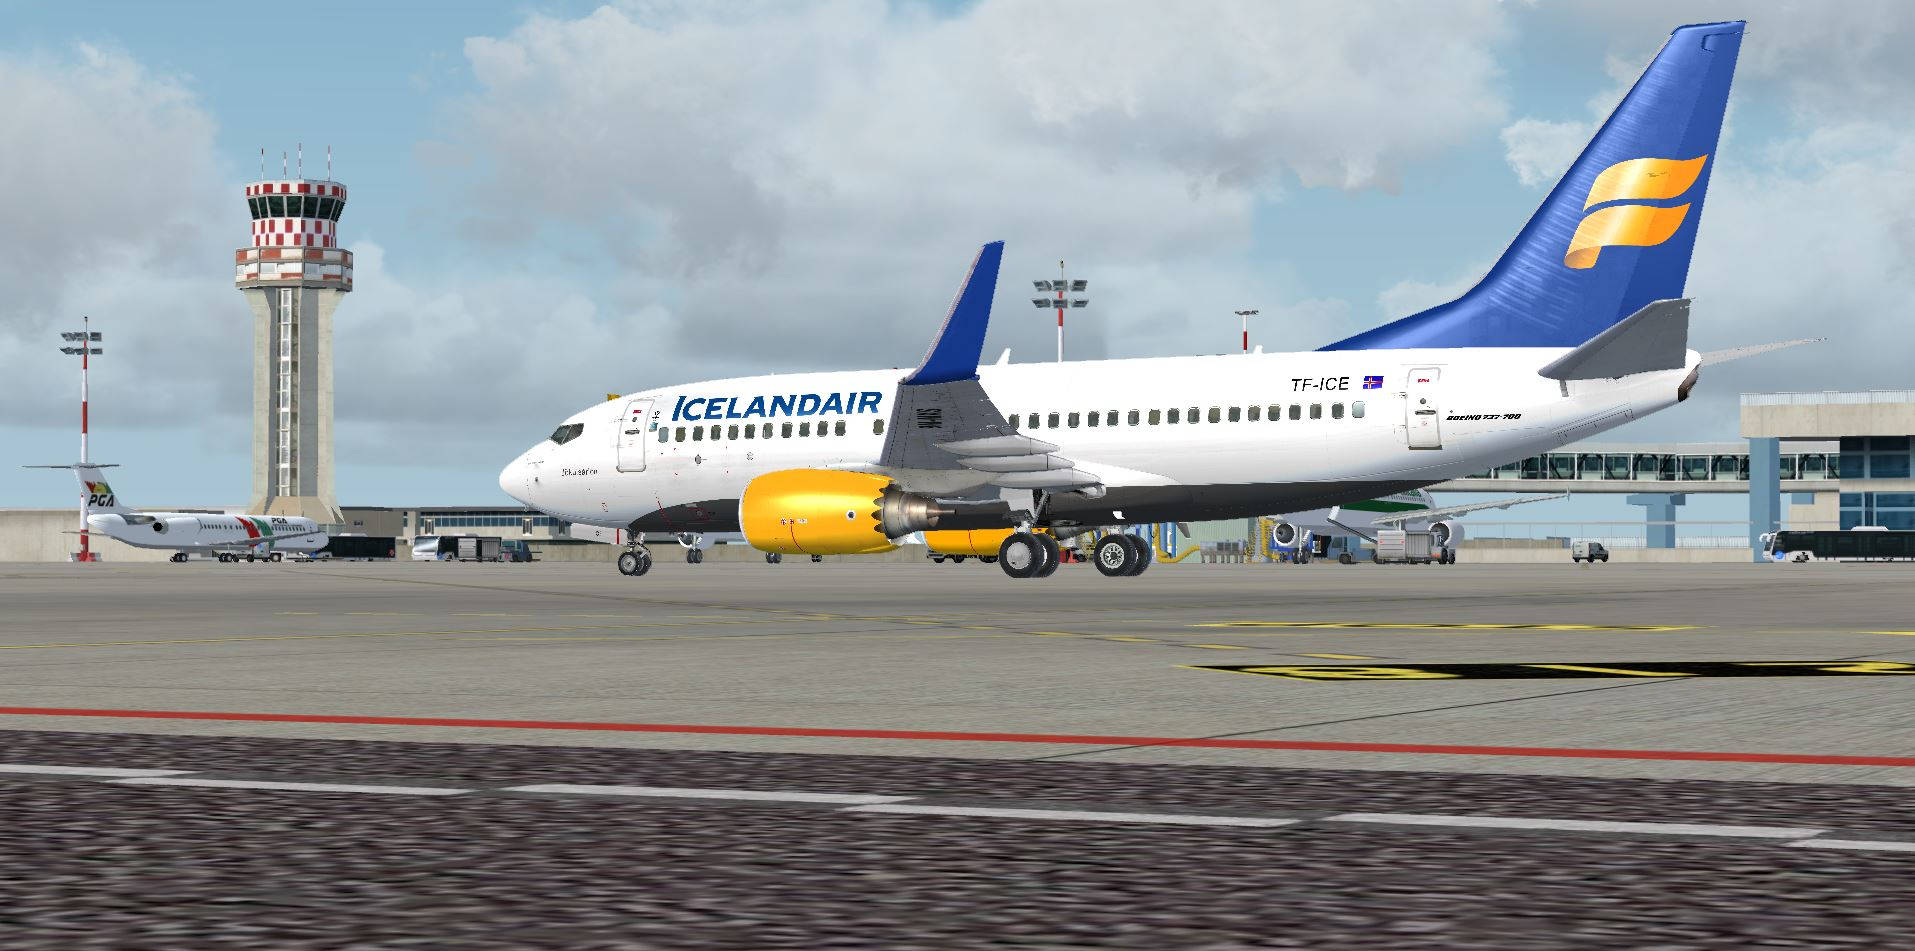 Arrival Of Icelandair Aviation Airplane Wallpaper